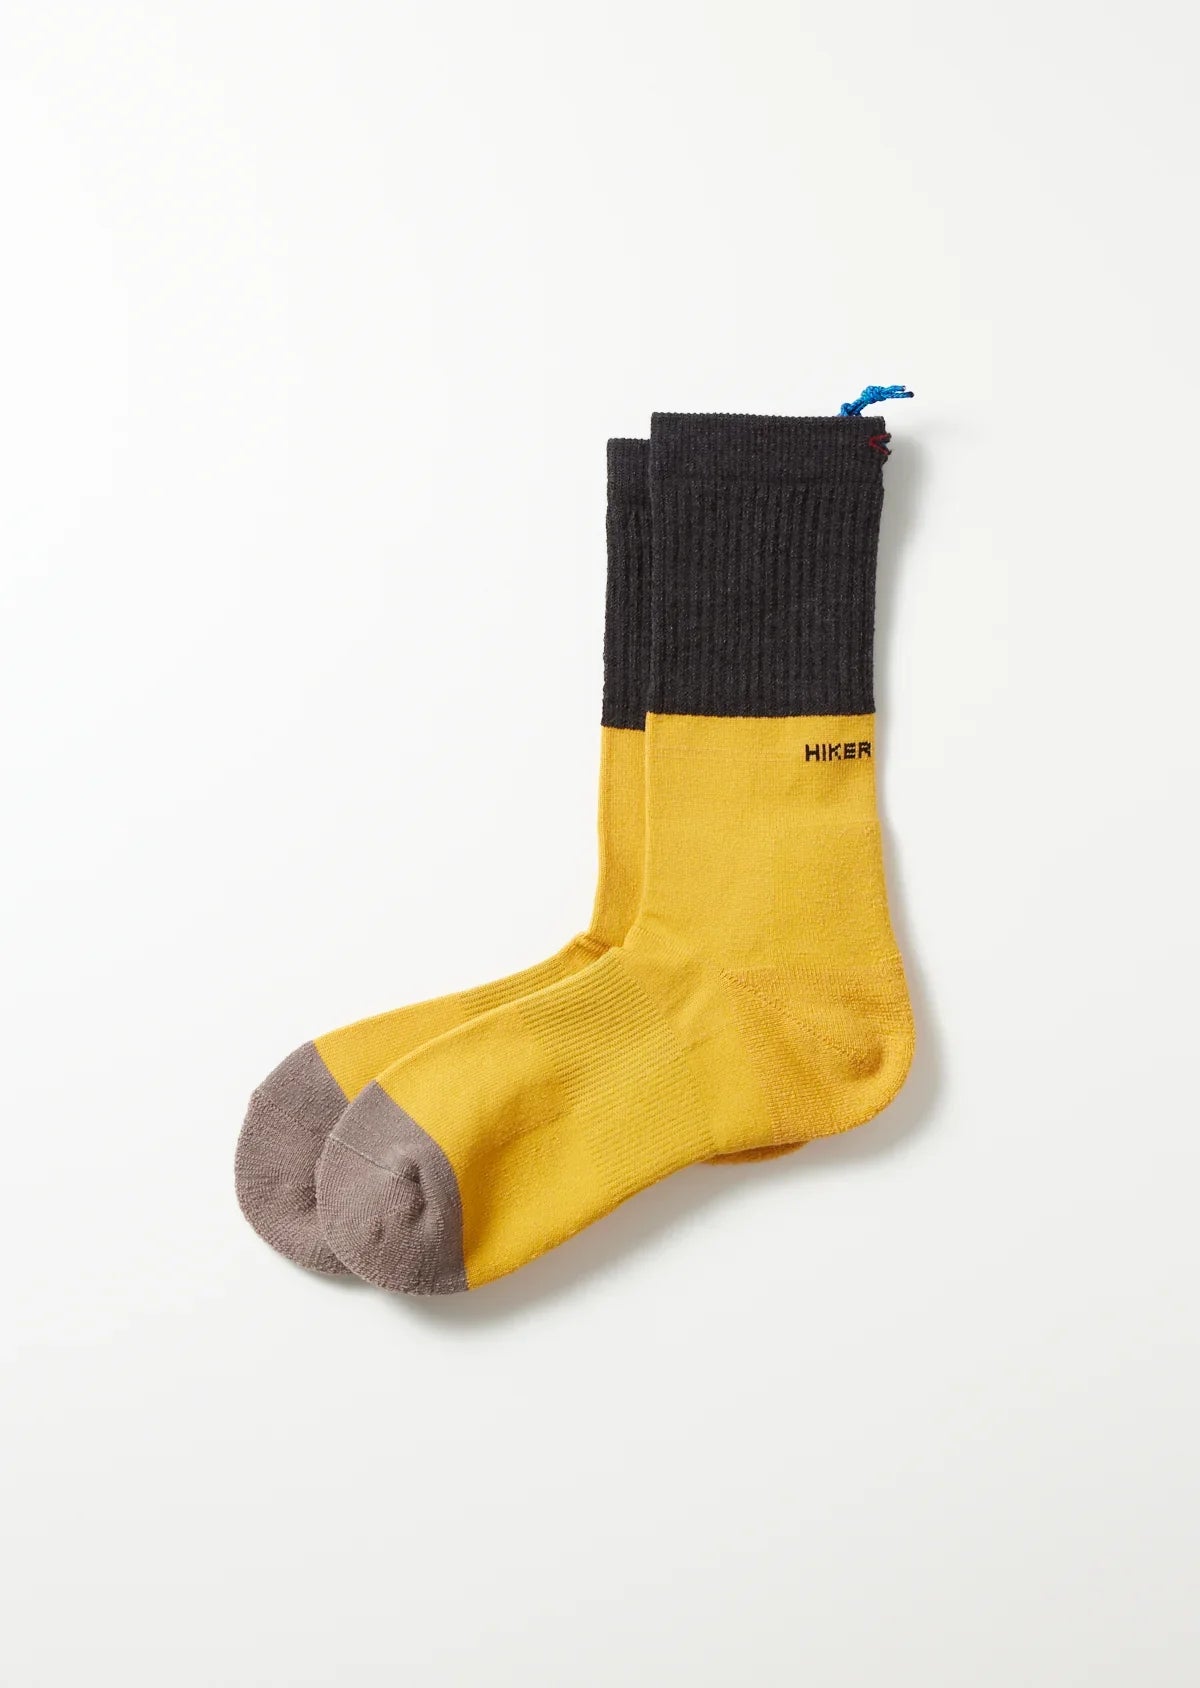 ROTOTO HIKER TRASH 登山健行羊毛長襪 [ 上薄下厚 ] 4色  日本製